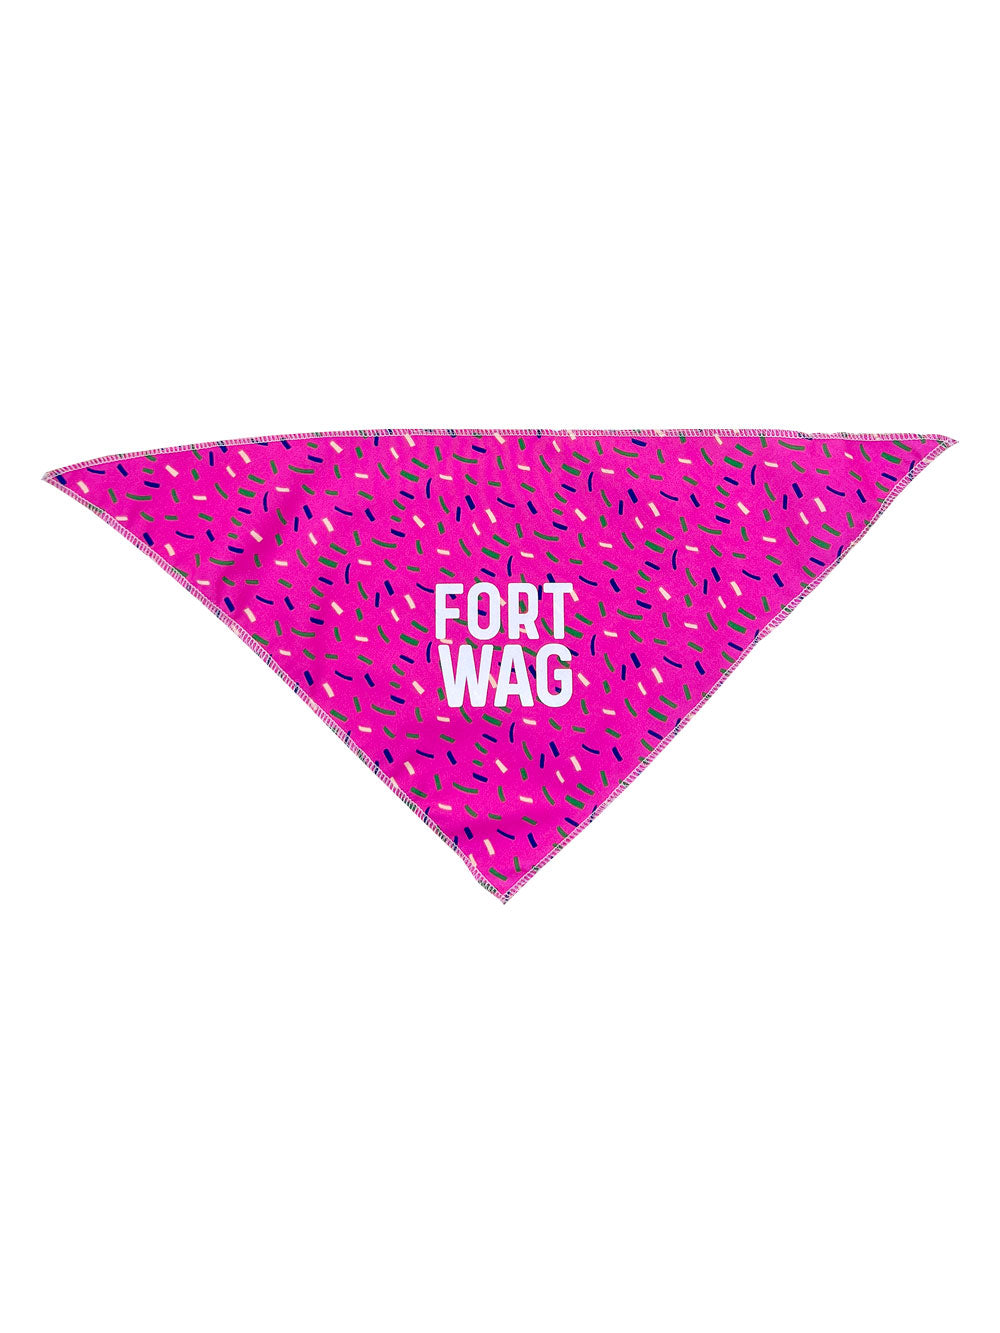 Fort Wag Pink patterned Dog Bandana